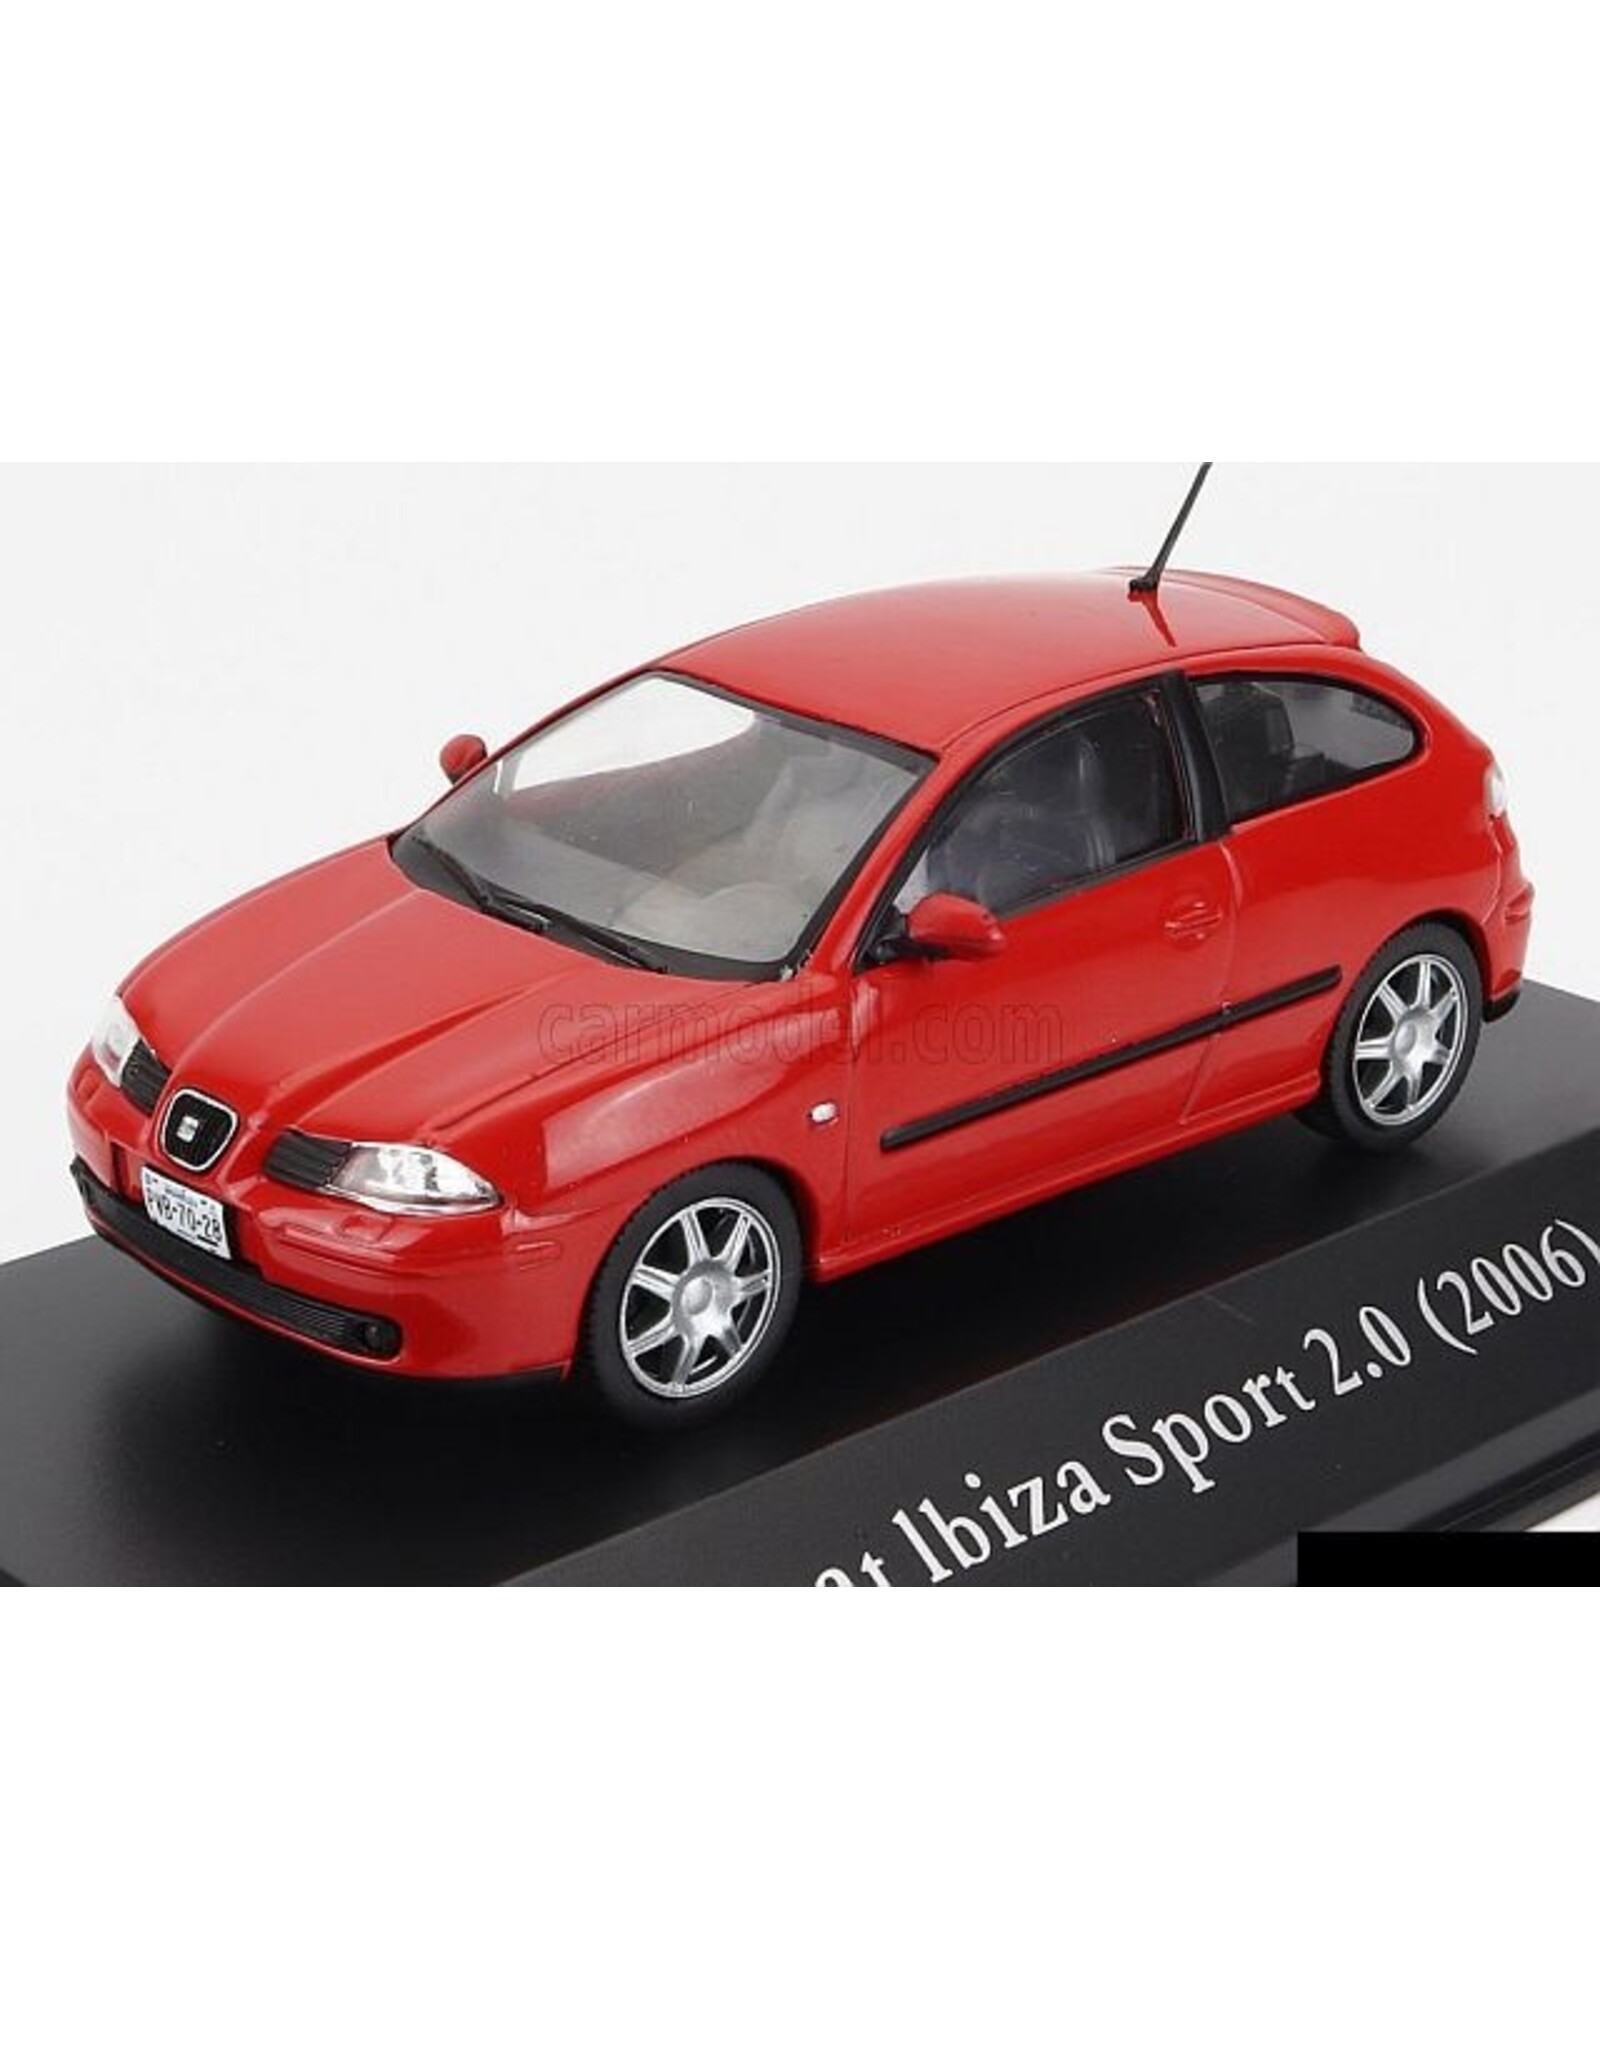 Seat Seat Ibiza Sport 2.0(2006)red